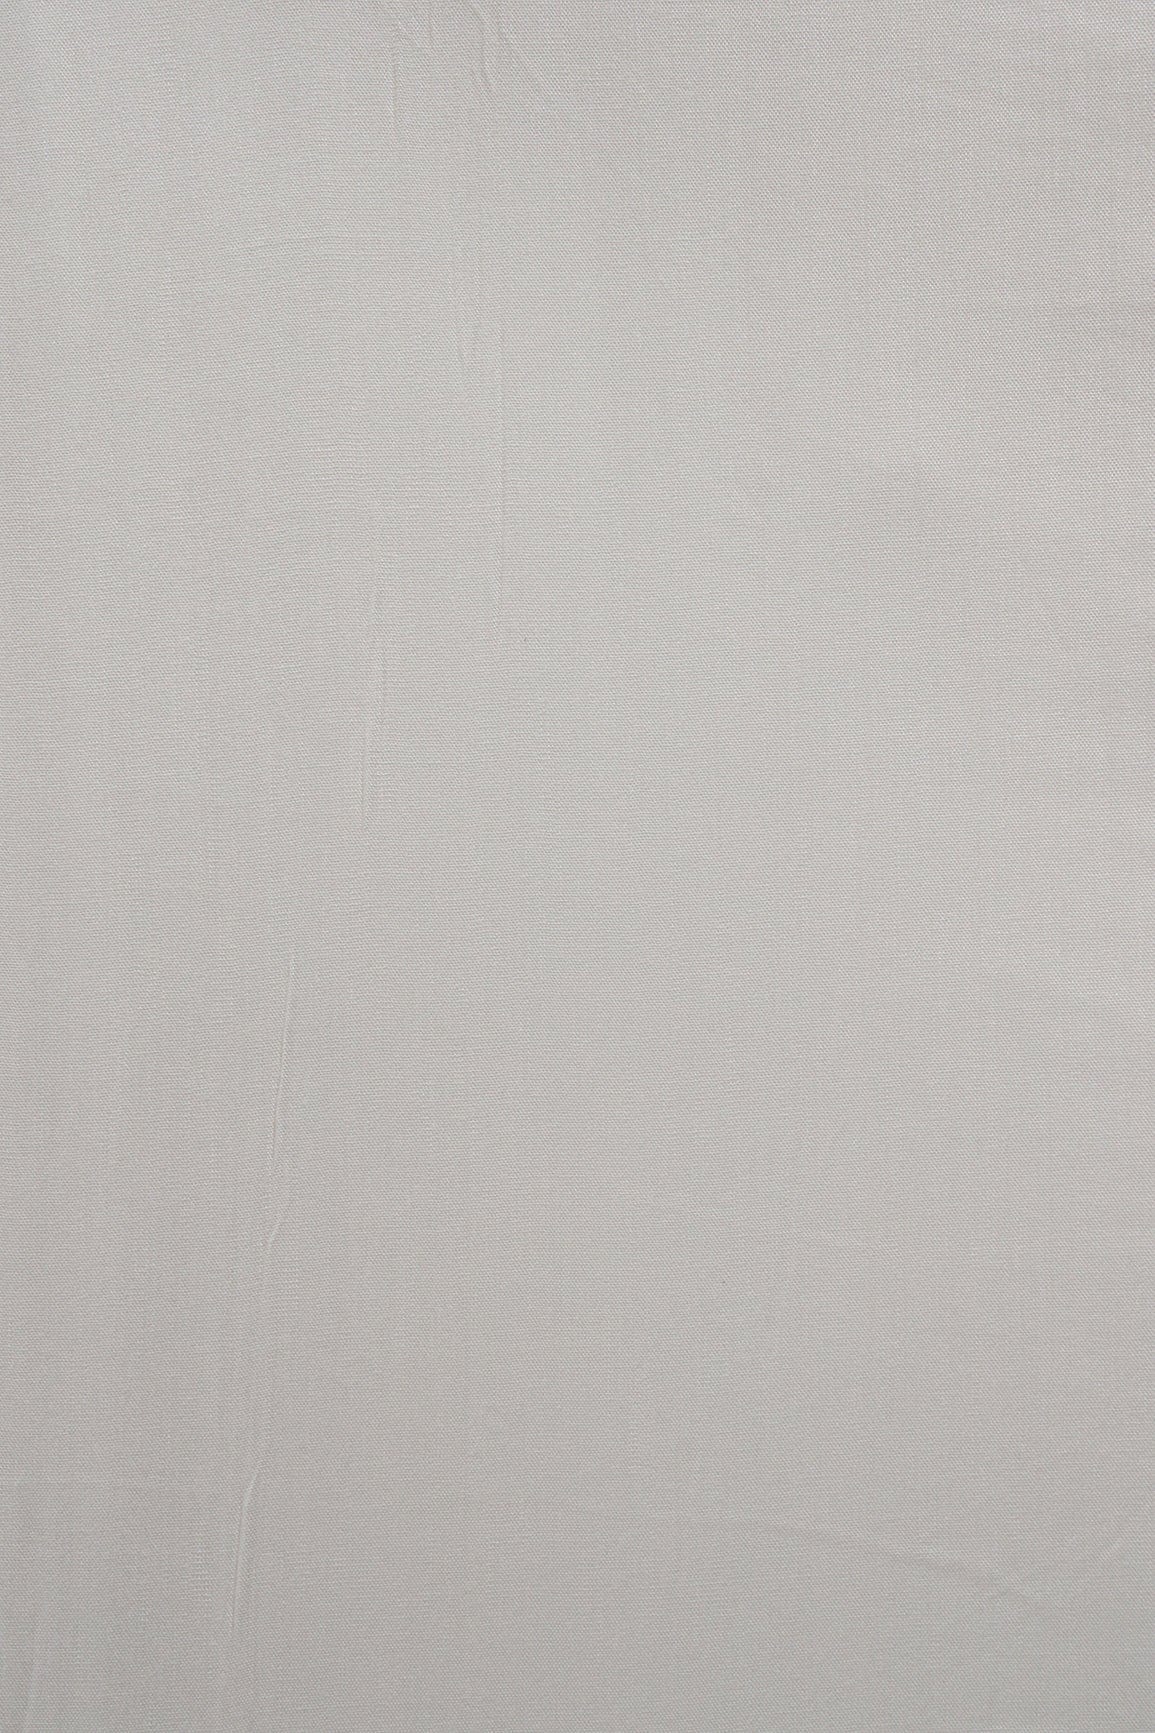 doeraa Plain Fabrics White Dyed Muslin Fabric